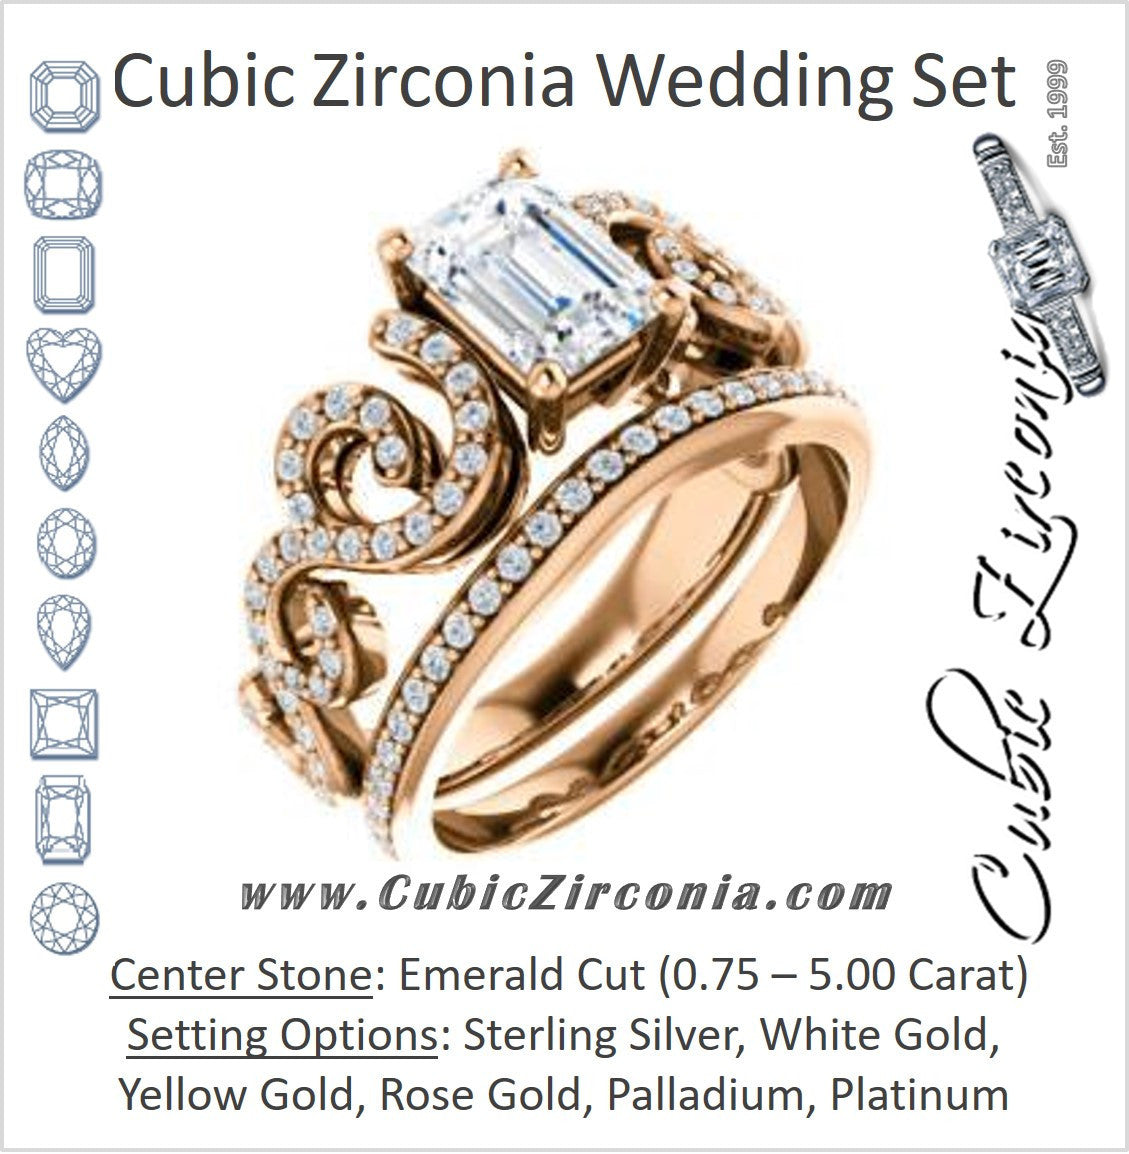 CZ Wedding Set, featuring The Carla engagement ring (Customizable Emerald Cut Split-Band Curves)